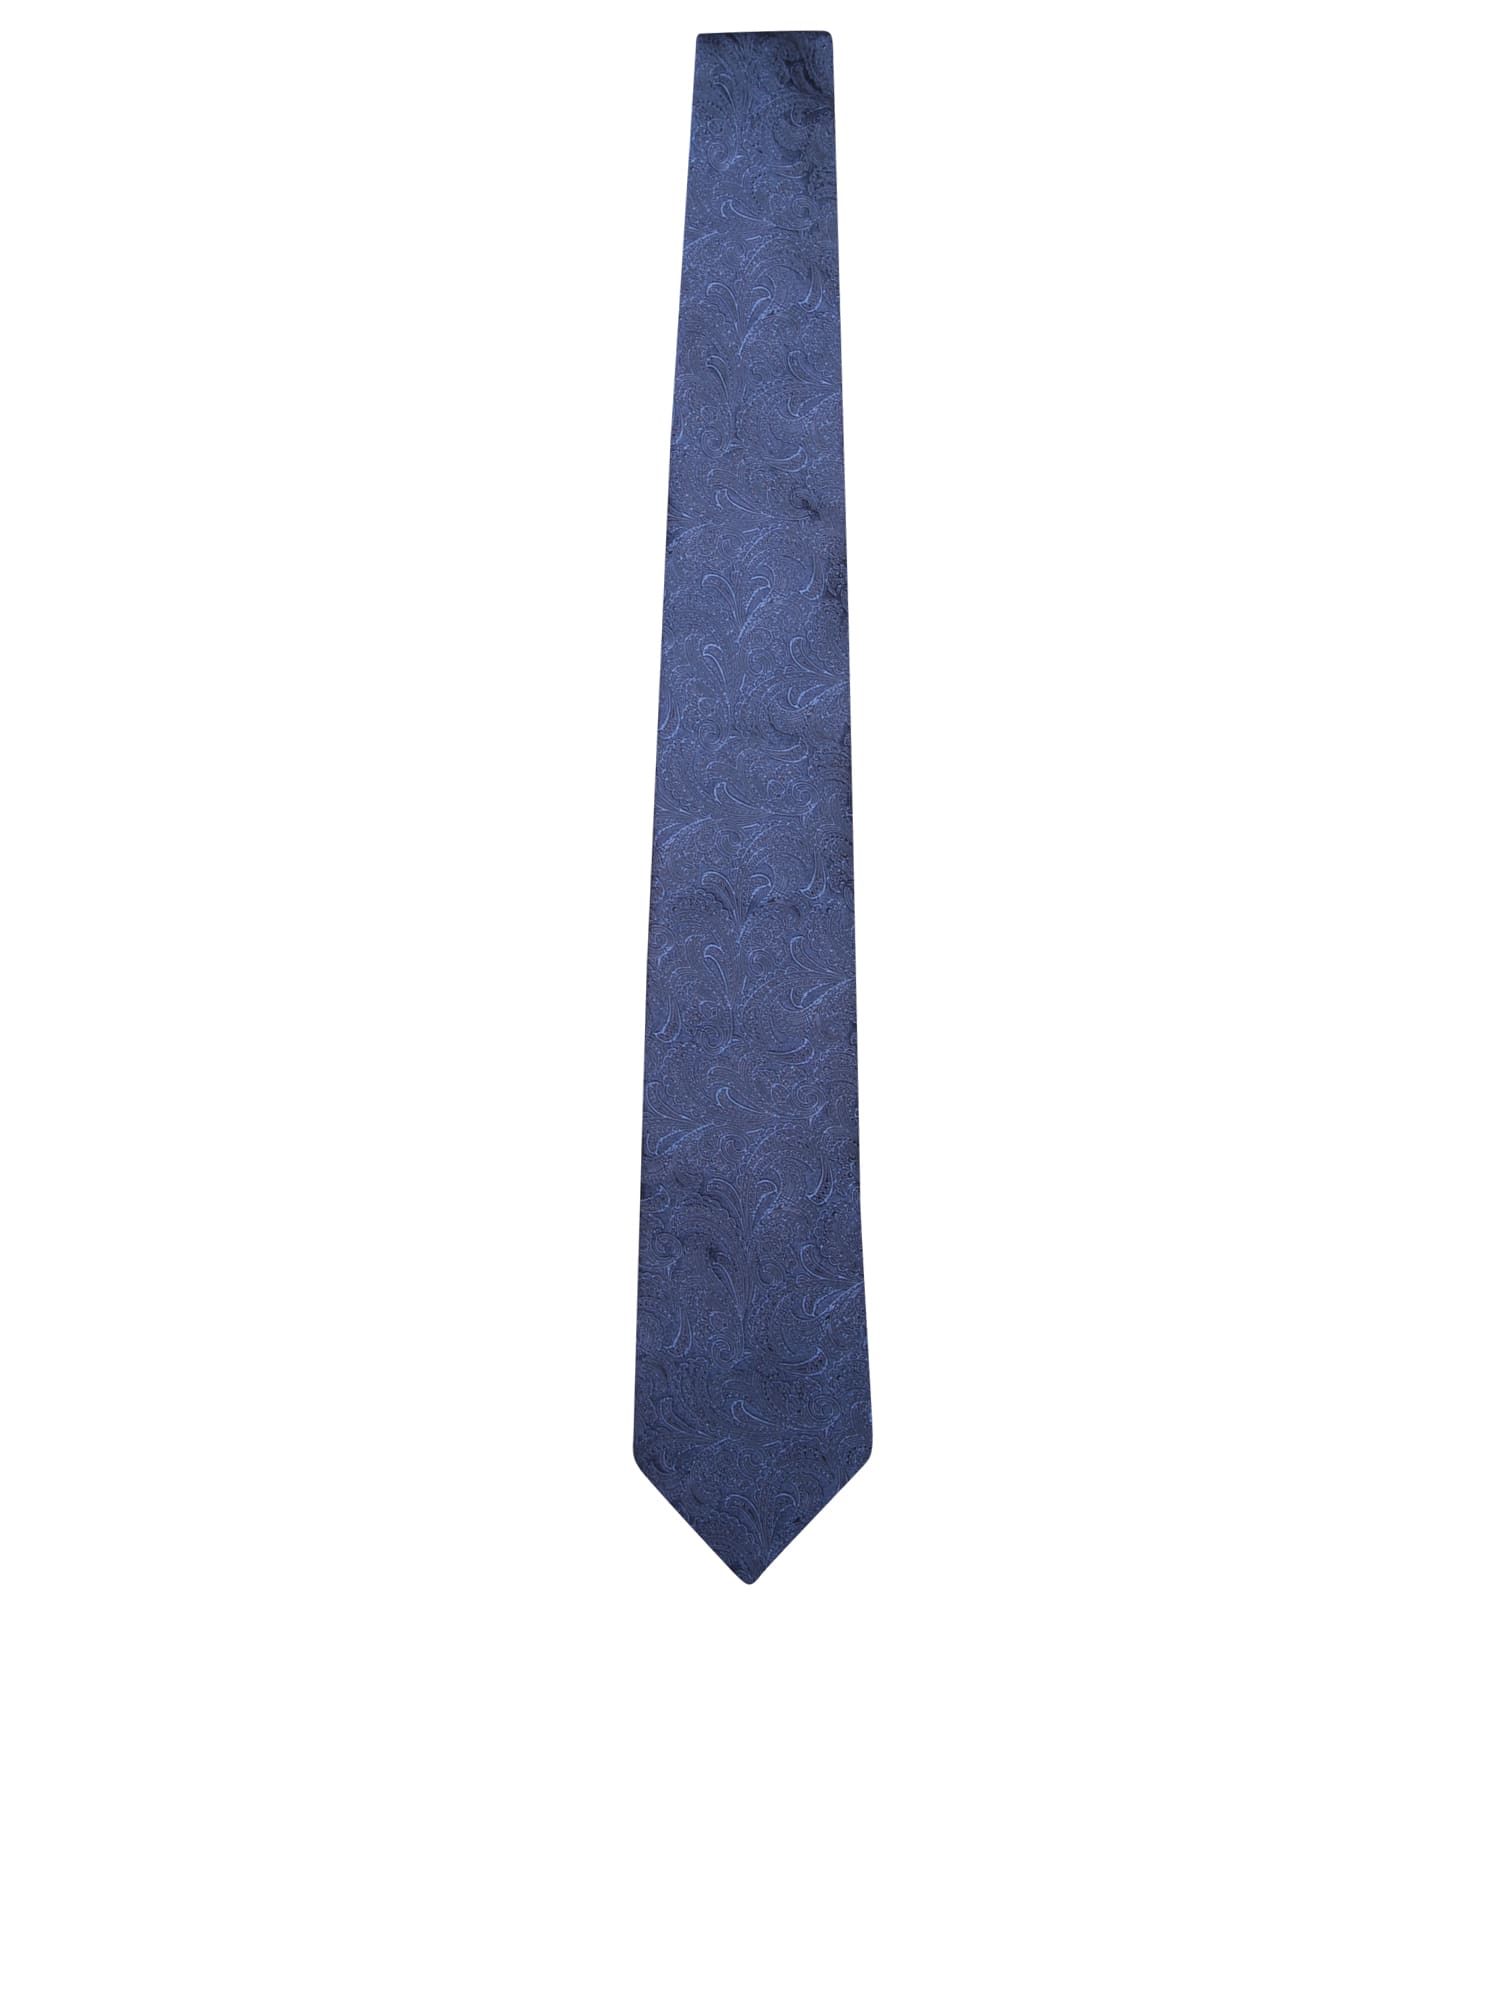 Paisley Motif Blue Tie